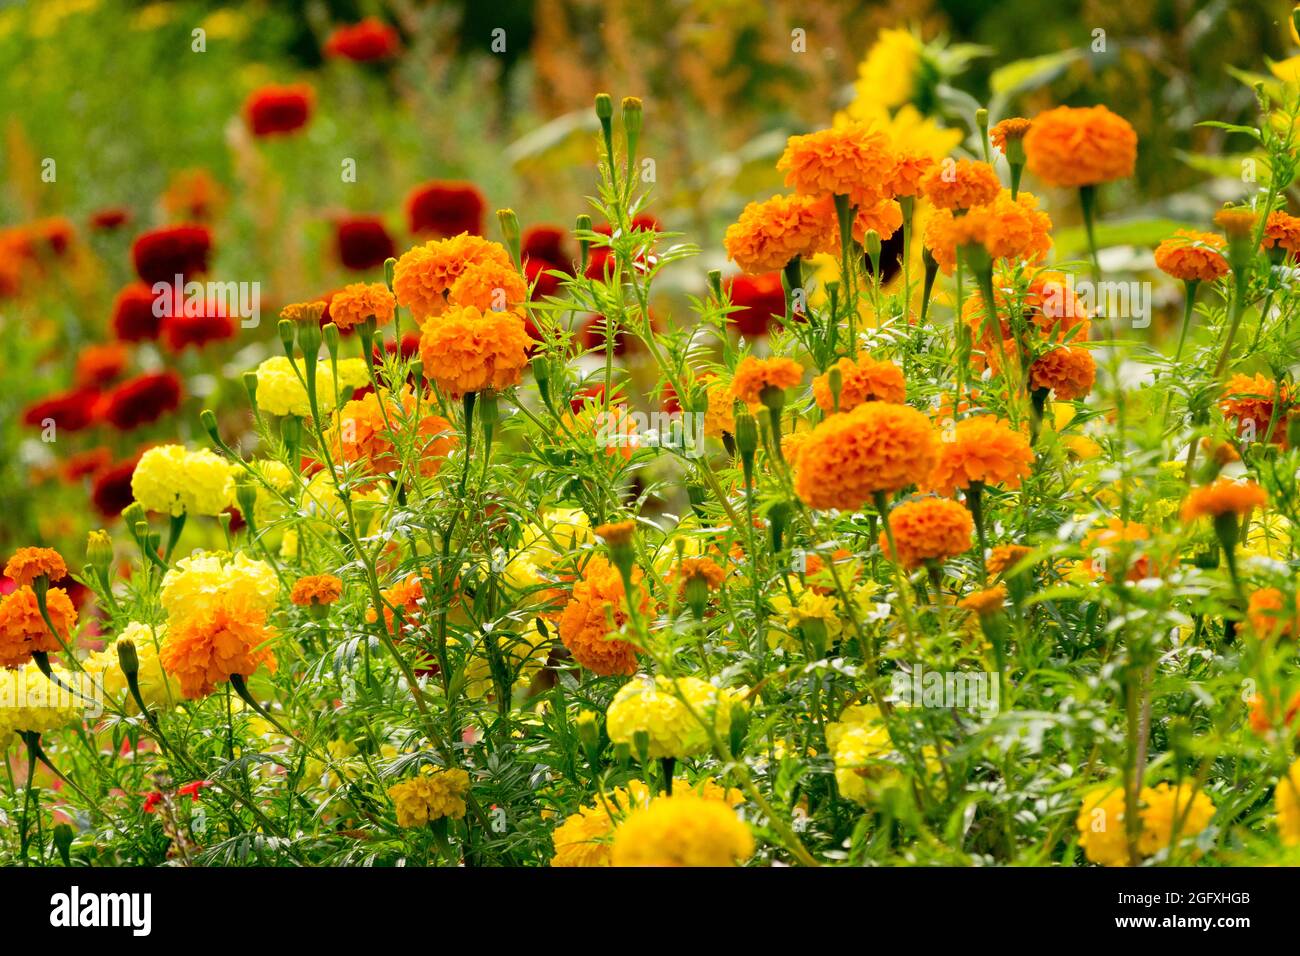 Garden late summer Orange Tagetes erecta Marigolds Red Zinnias Stock Photo